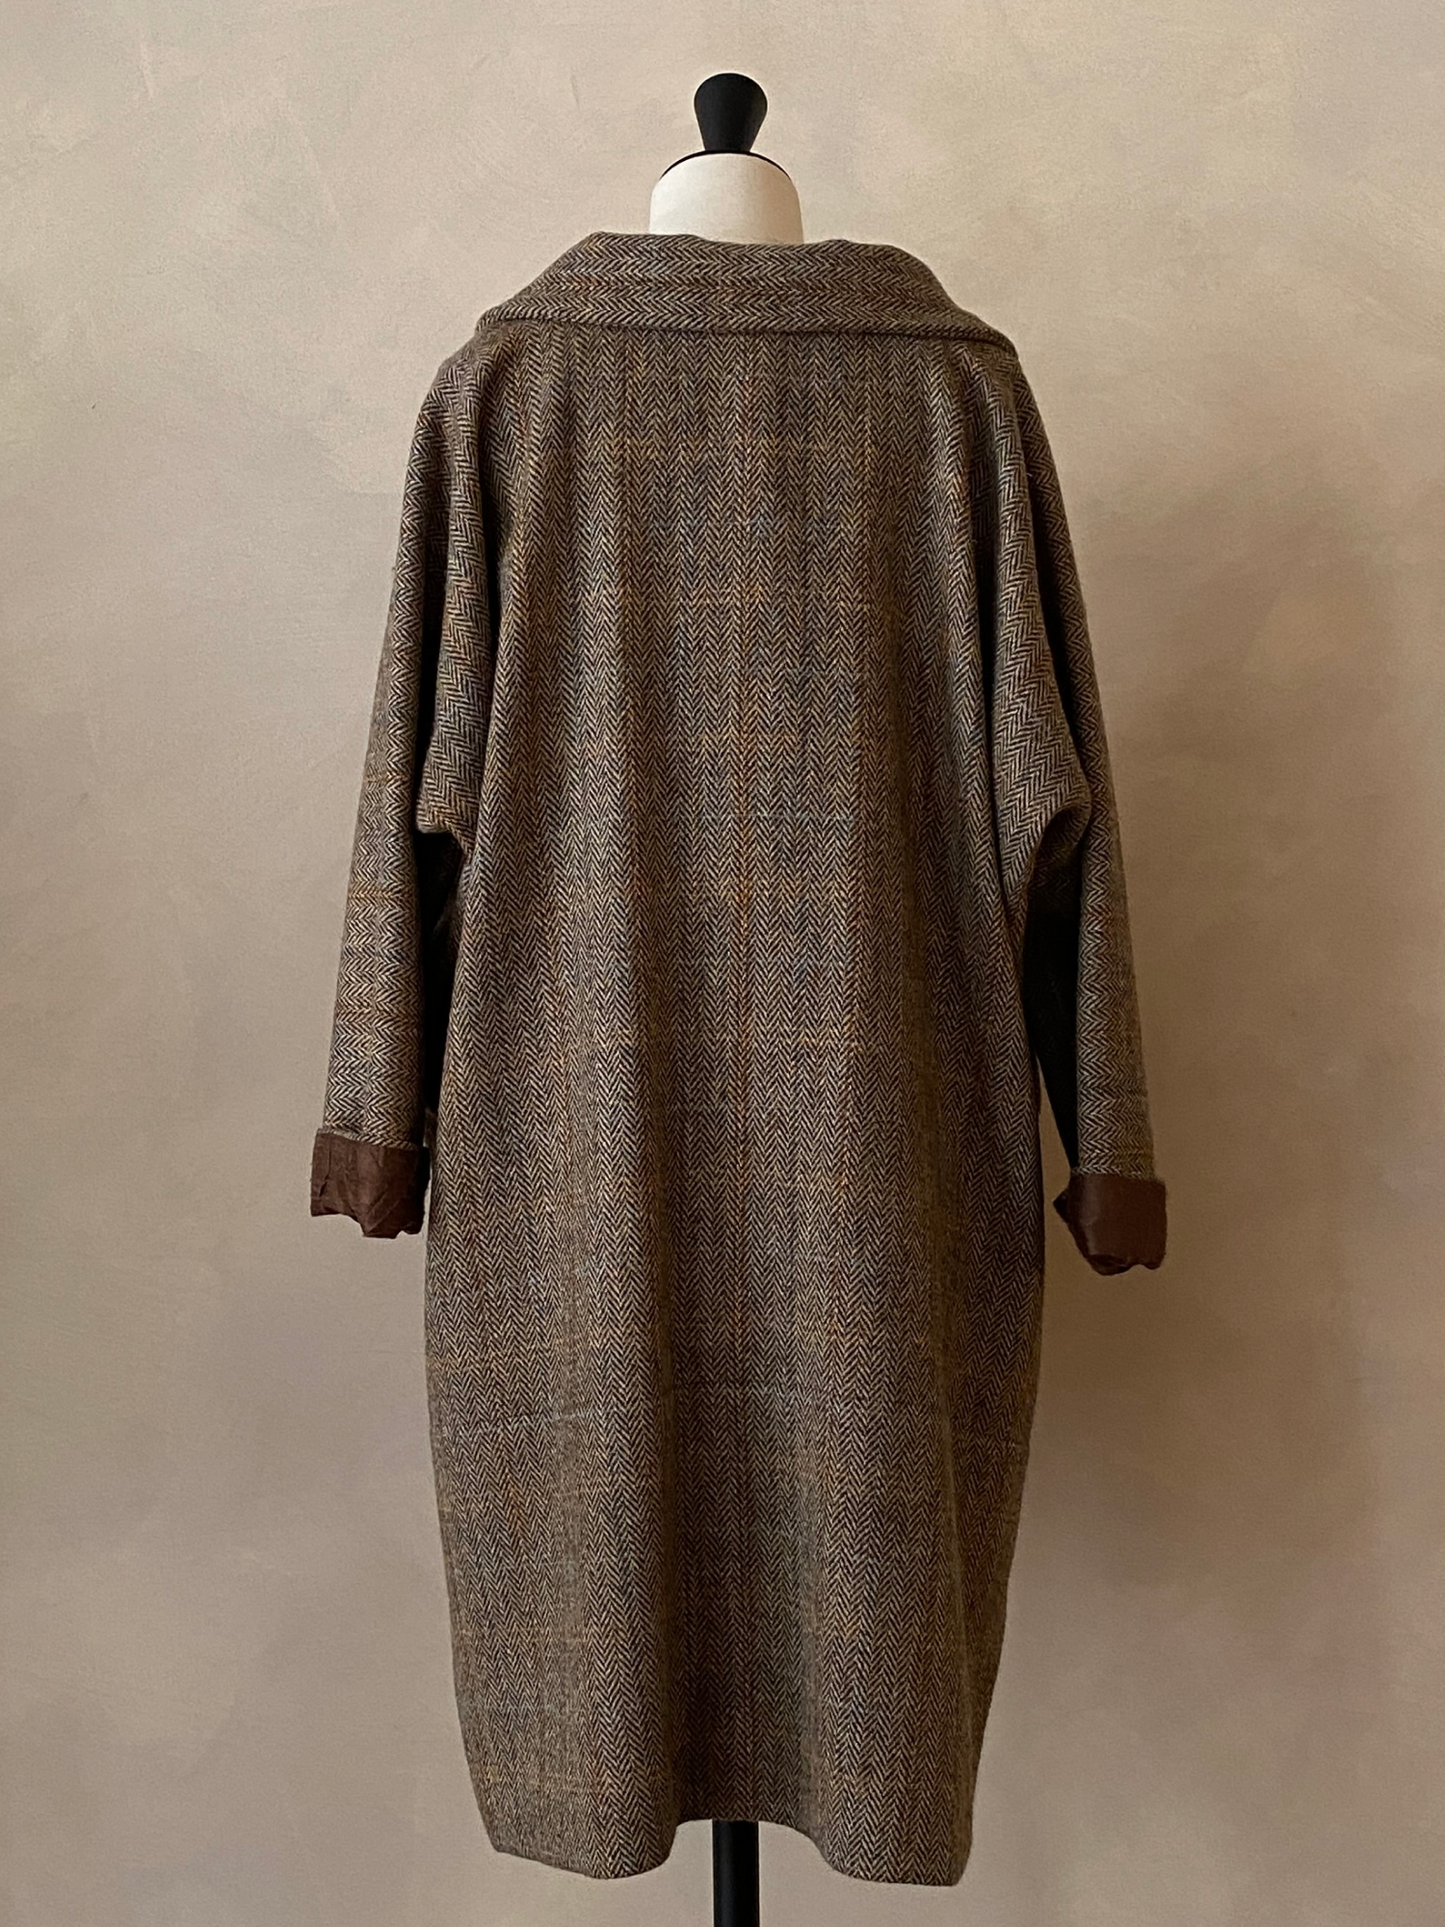 Brown Scottish tweed wool coat